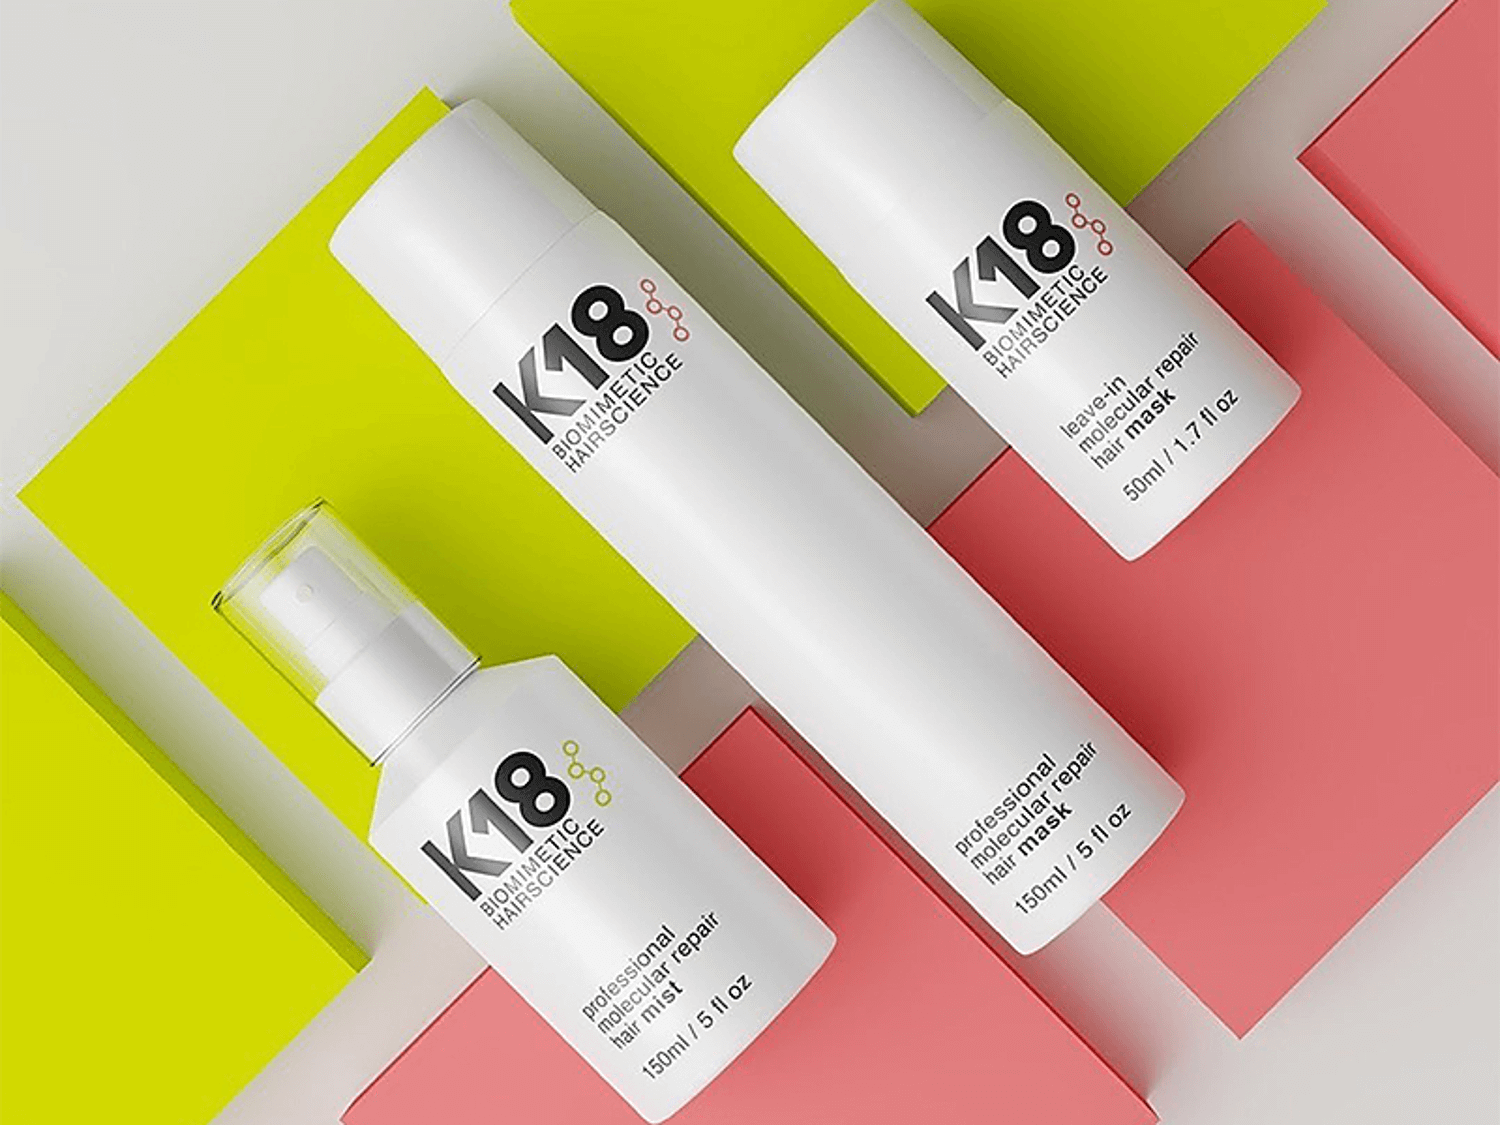 Bond Repair & Reduce Hair’s Porosity using K18